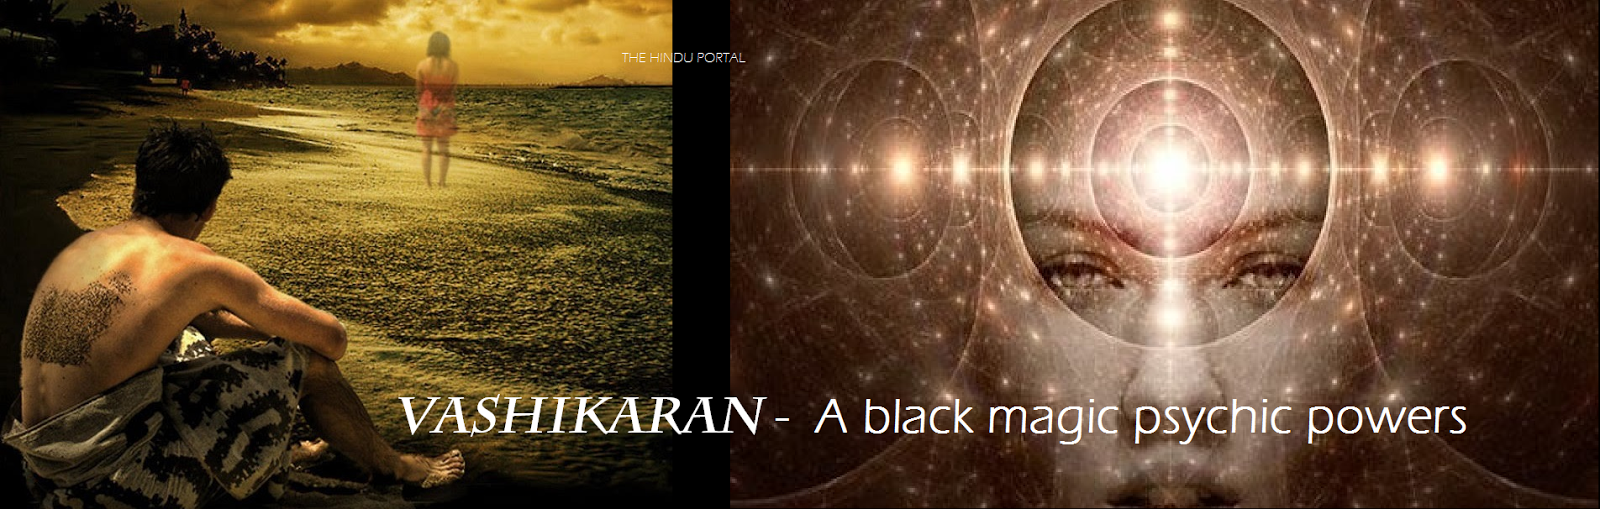 Vashikaran -  A black magic psychic powers to take control over someone